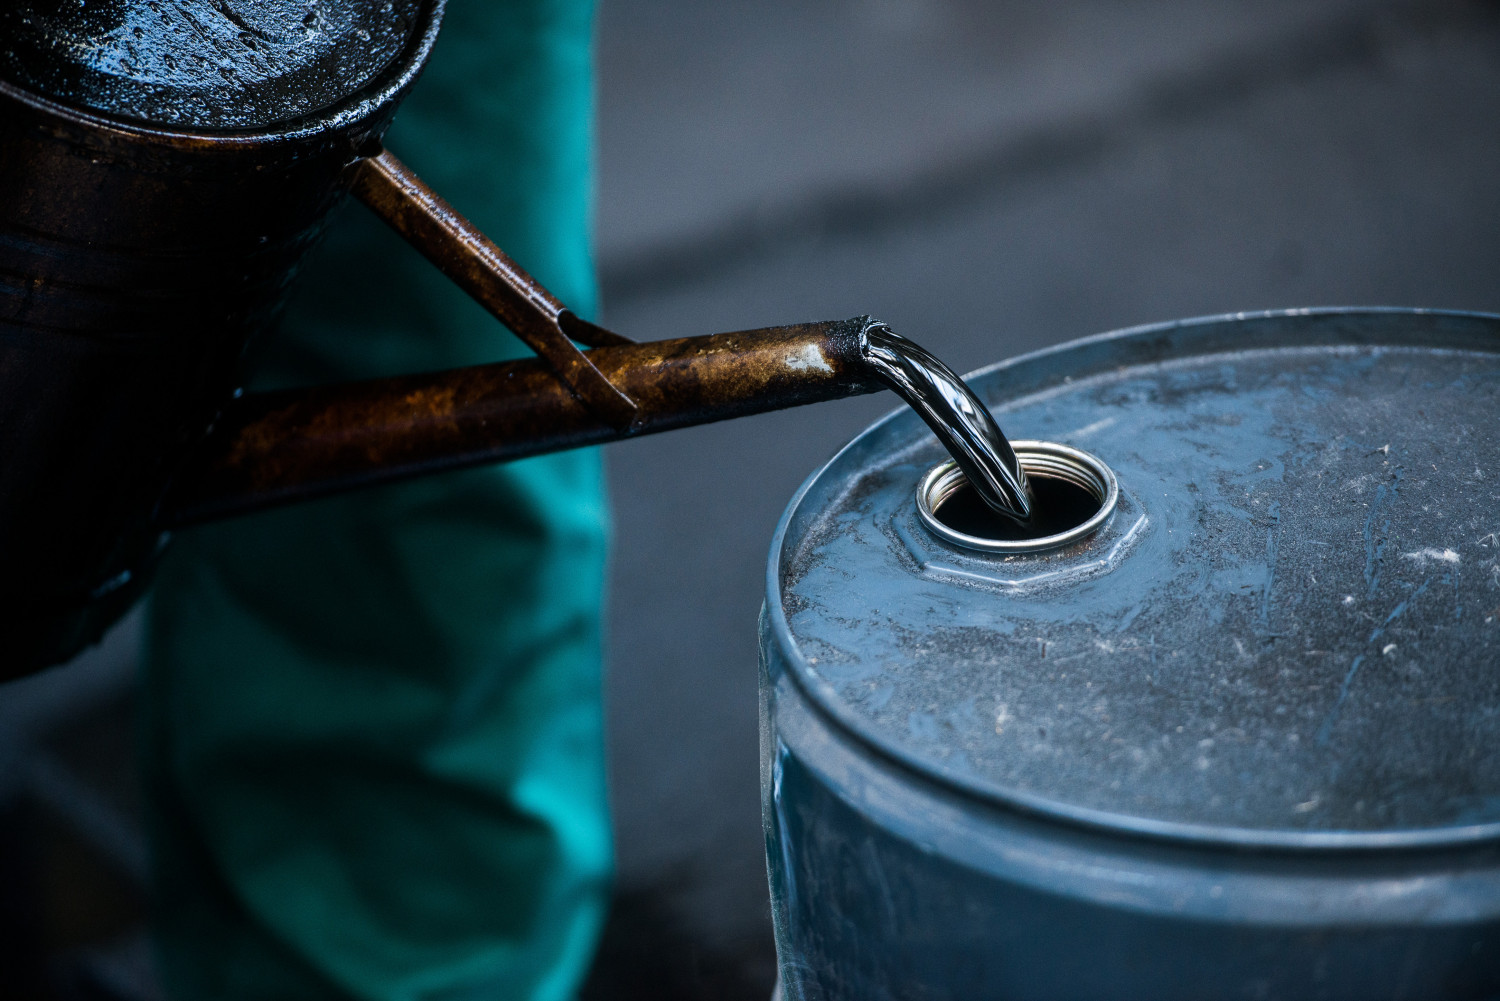  Radnik pretače sirovu naftu u bure (Foto: Akos Stiller/Bloomberg via Getty Images)